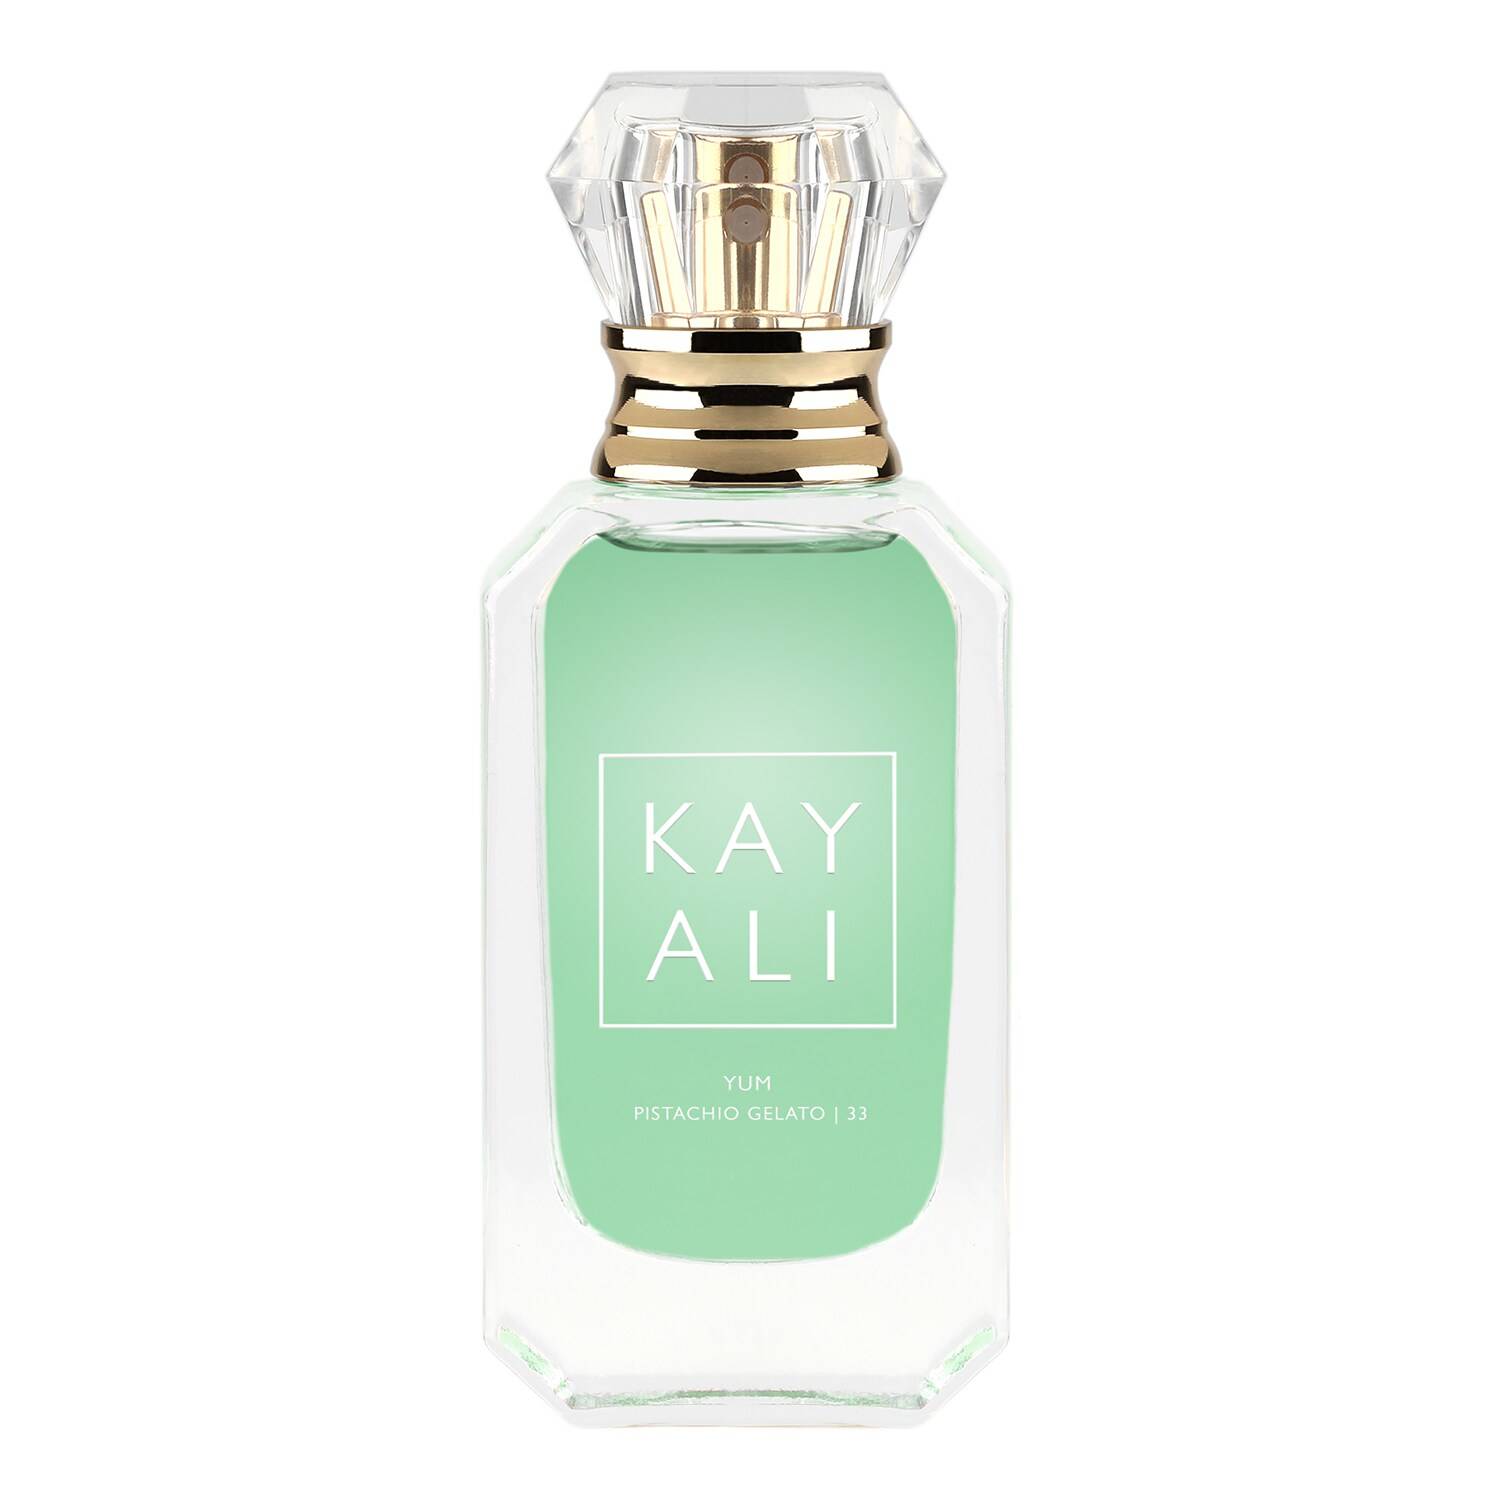 Kayali Yum Pistachio Gelato - 33 Eau De Parfum Intense 10Ml